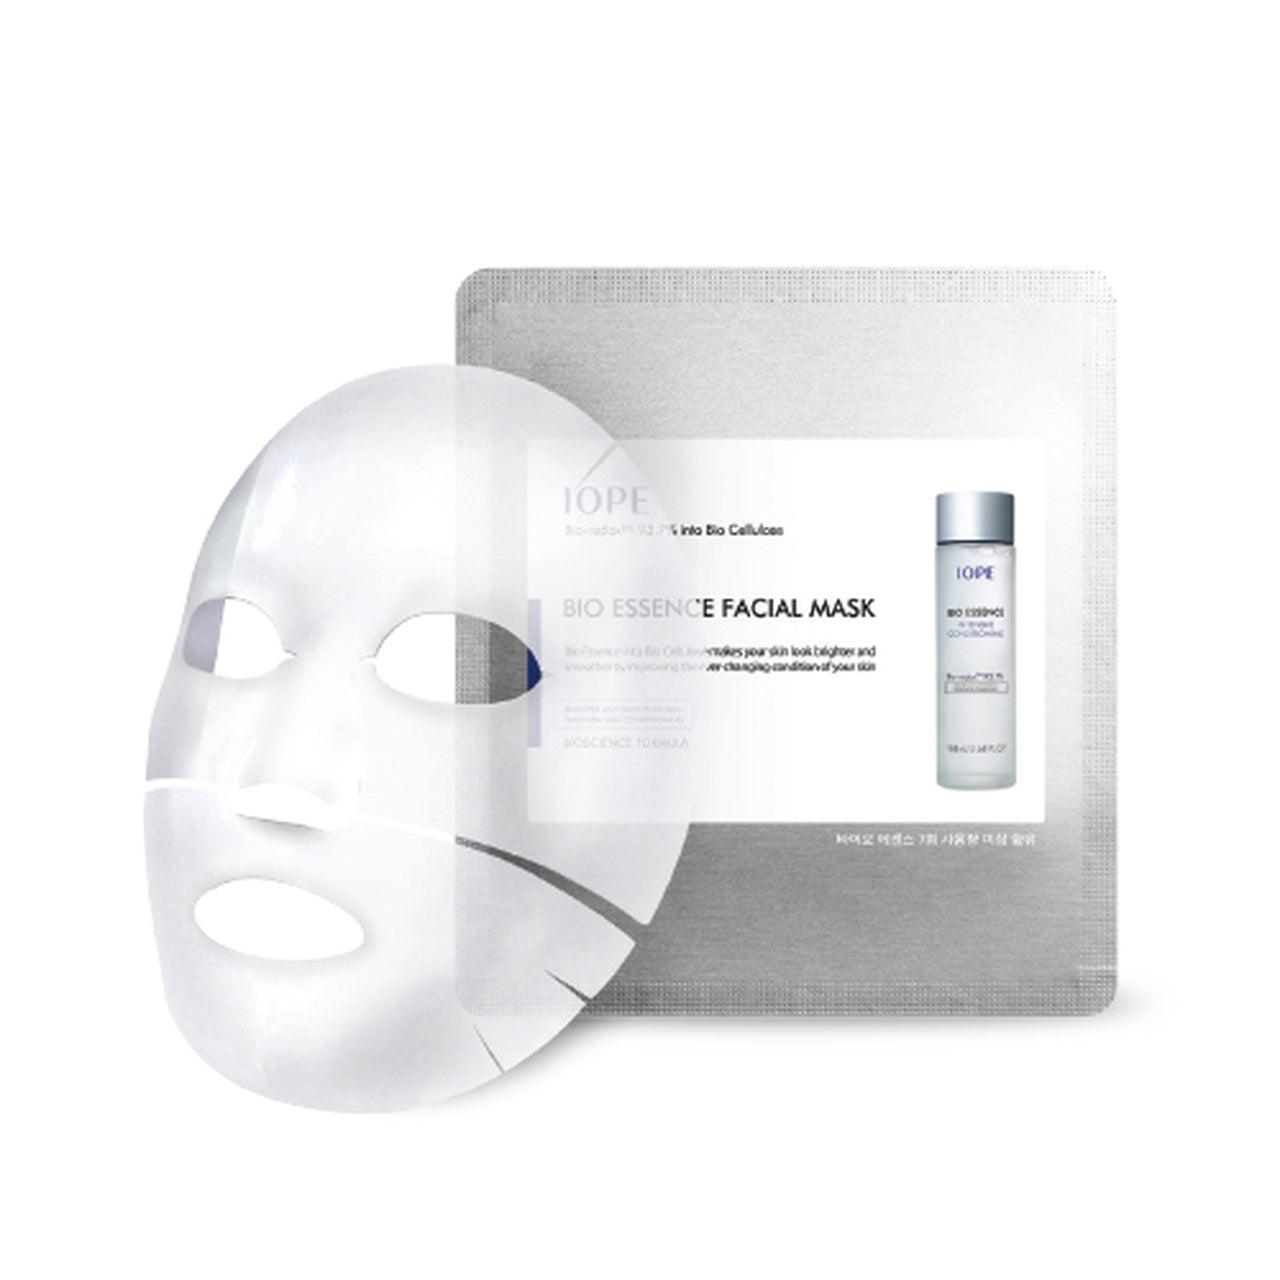 Маска для лица, Sence facial, 23 мл, в ассортименте. Маски Kimino. Nica Bio facial Mask маска для лица. WELLDERMA Premium Sapphire Collagen Impact fitting Mask.